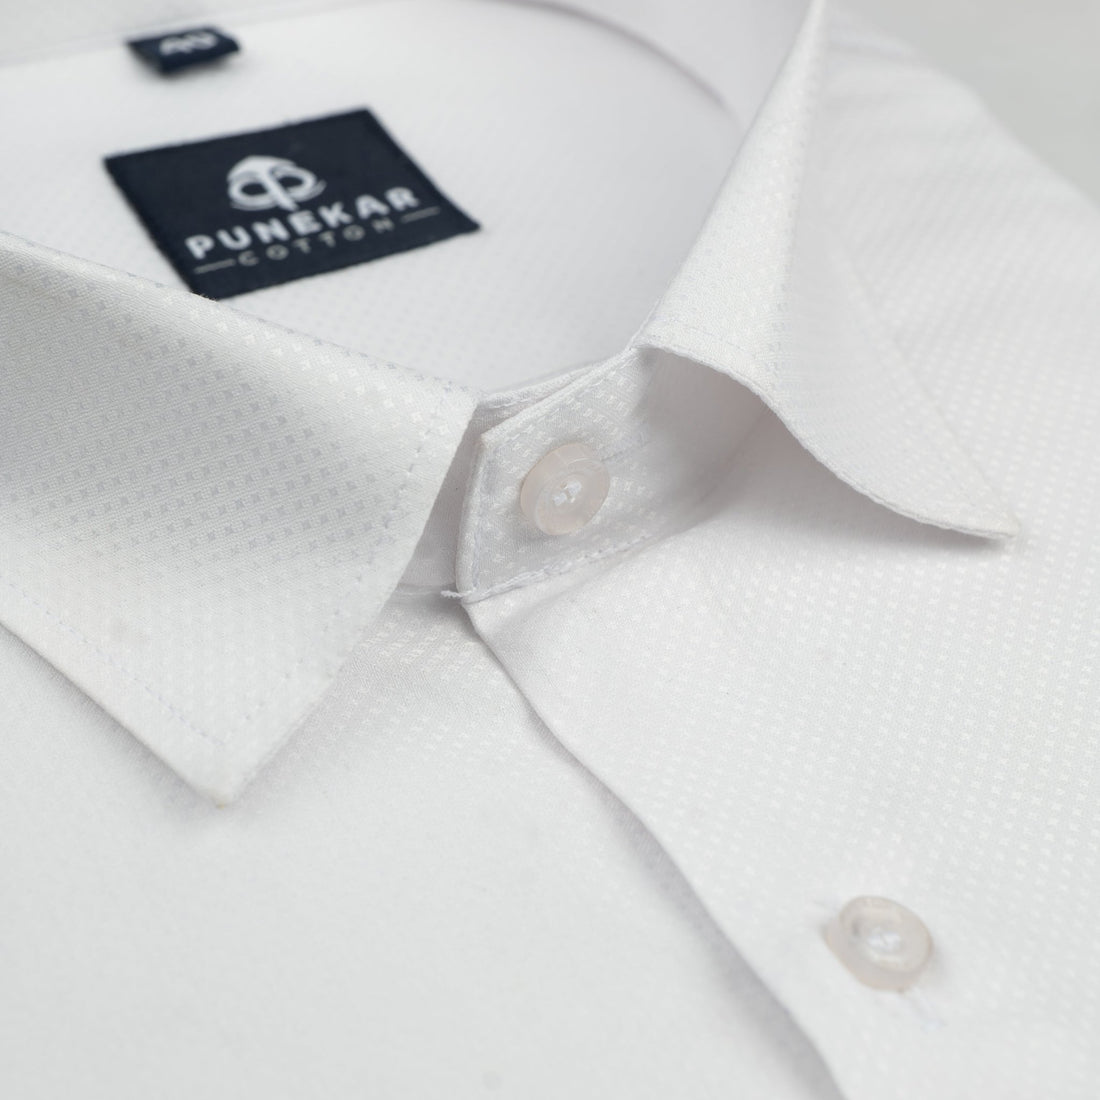 White Color Dotted Dobby Cotton Shirt For Men - Punekar Cotton